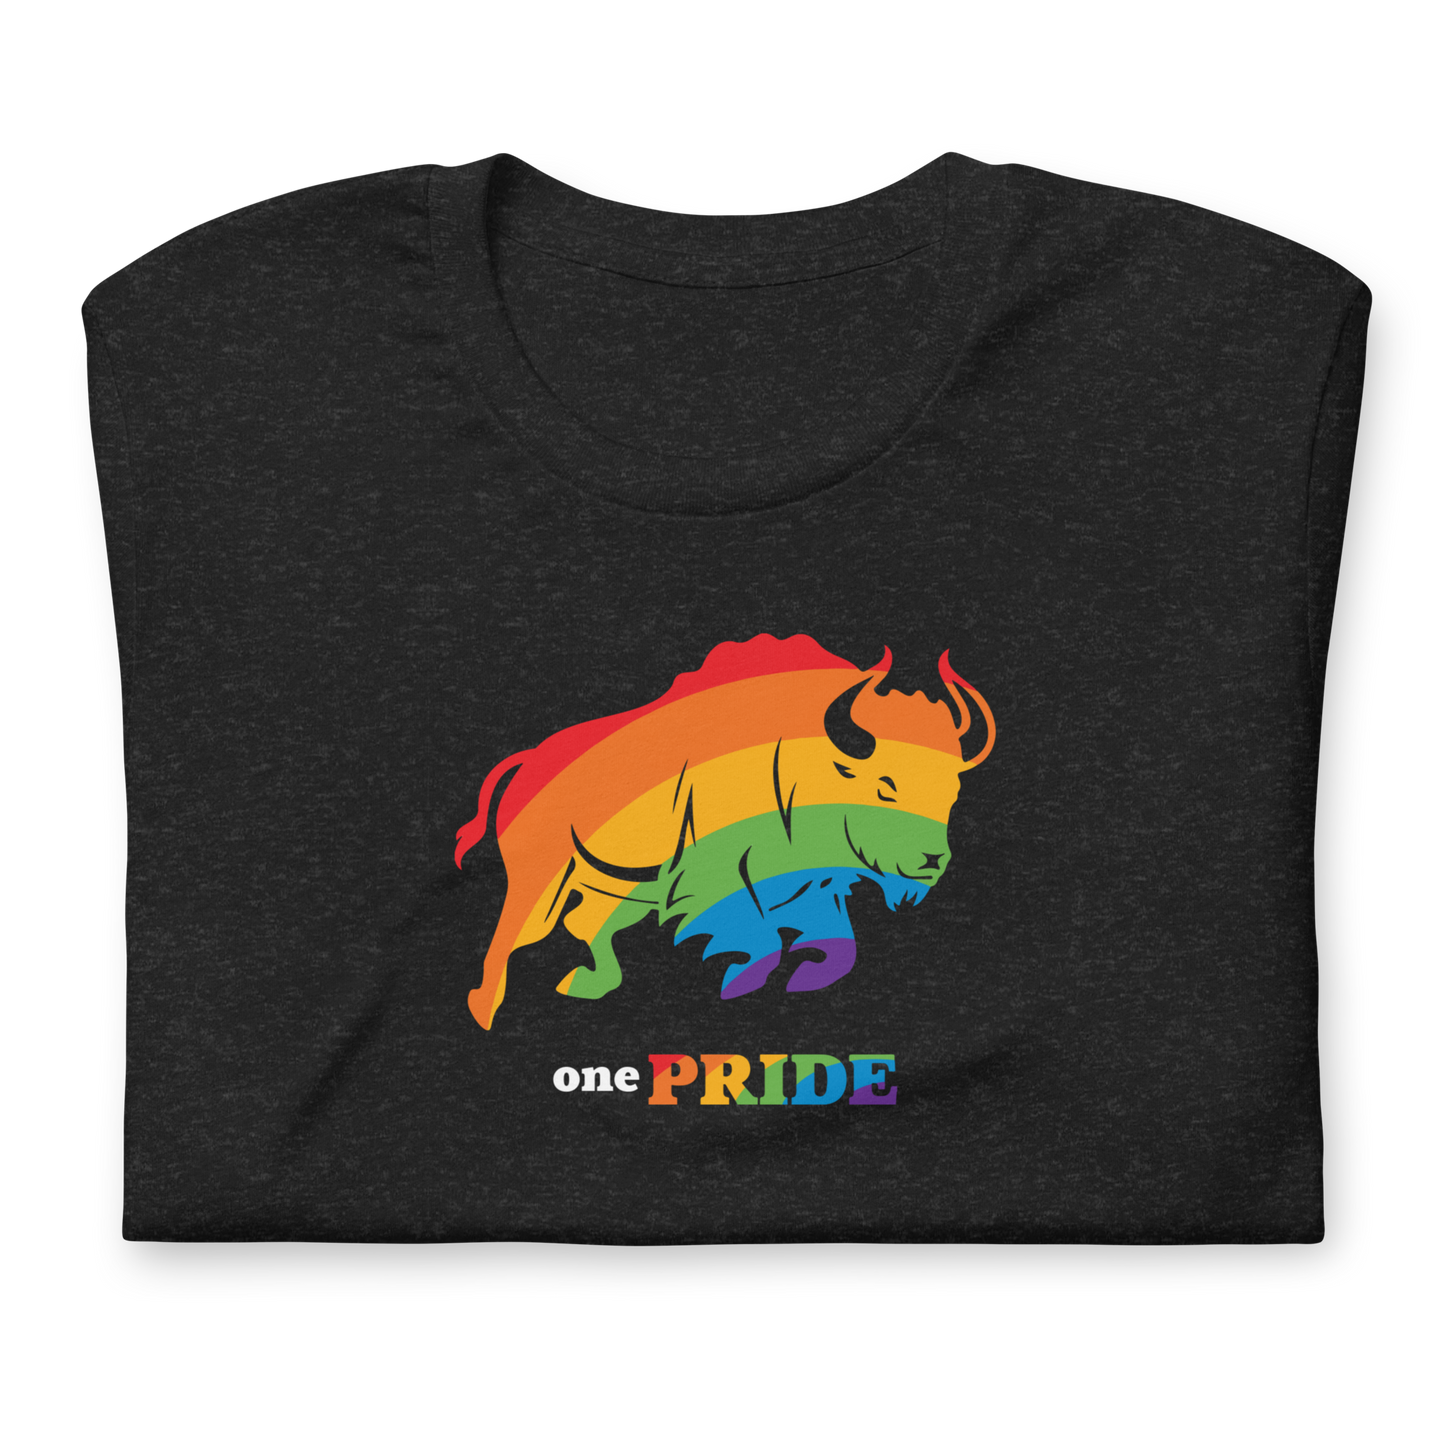 "One PRIDE" T-Shirt